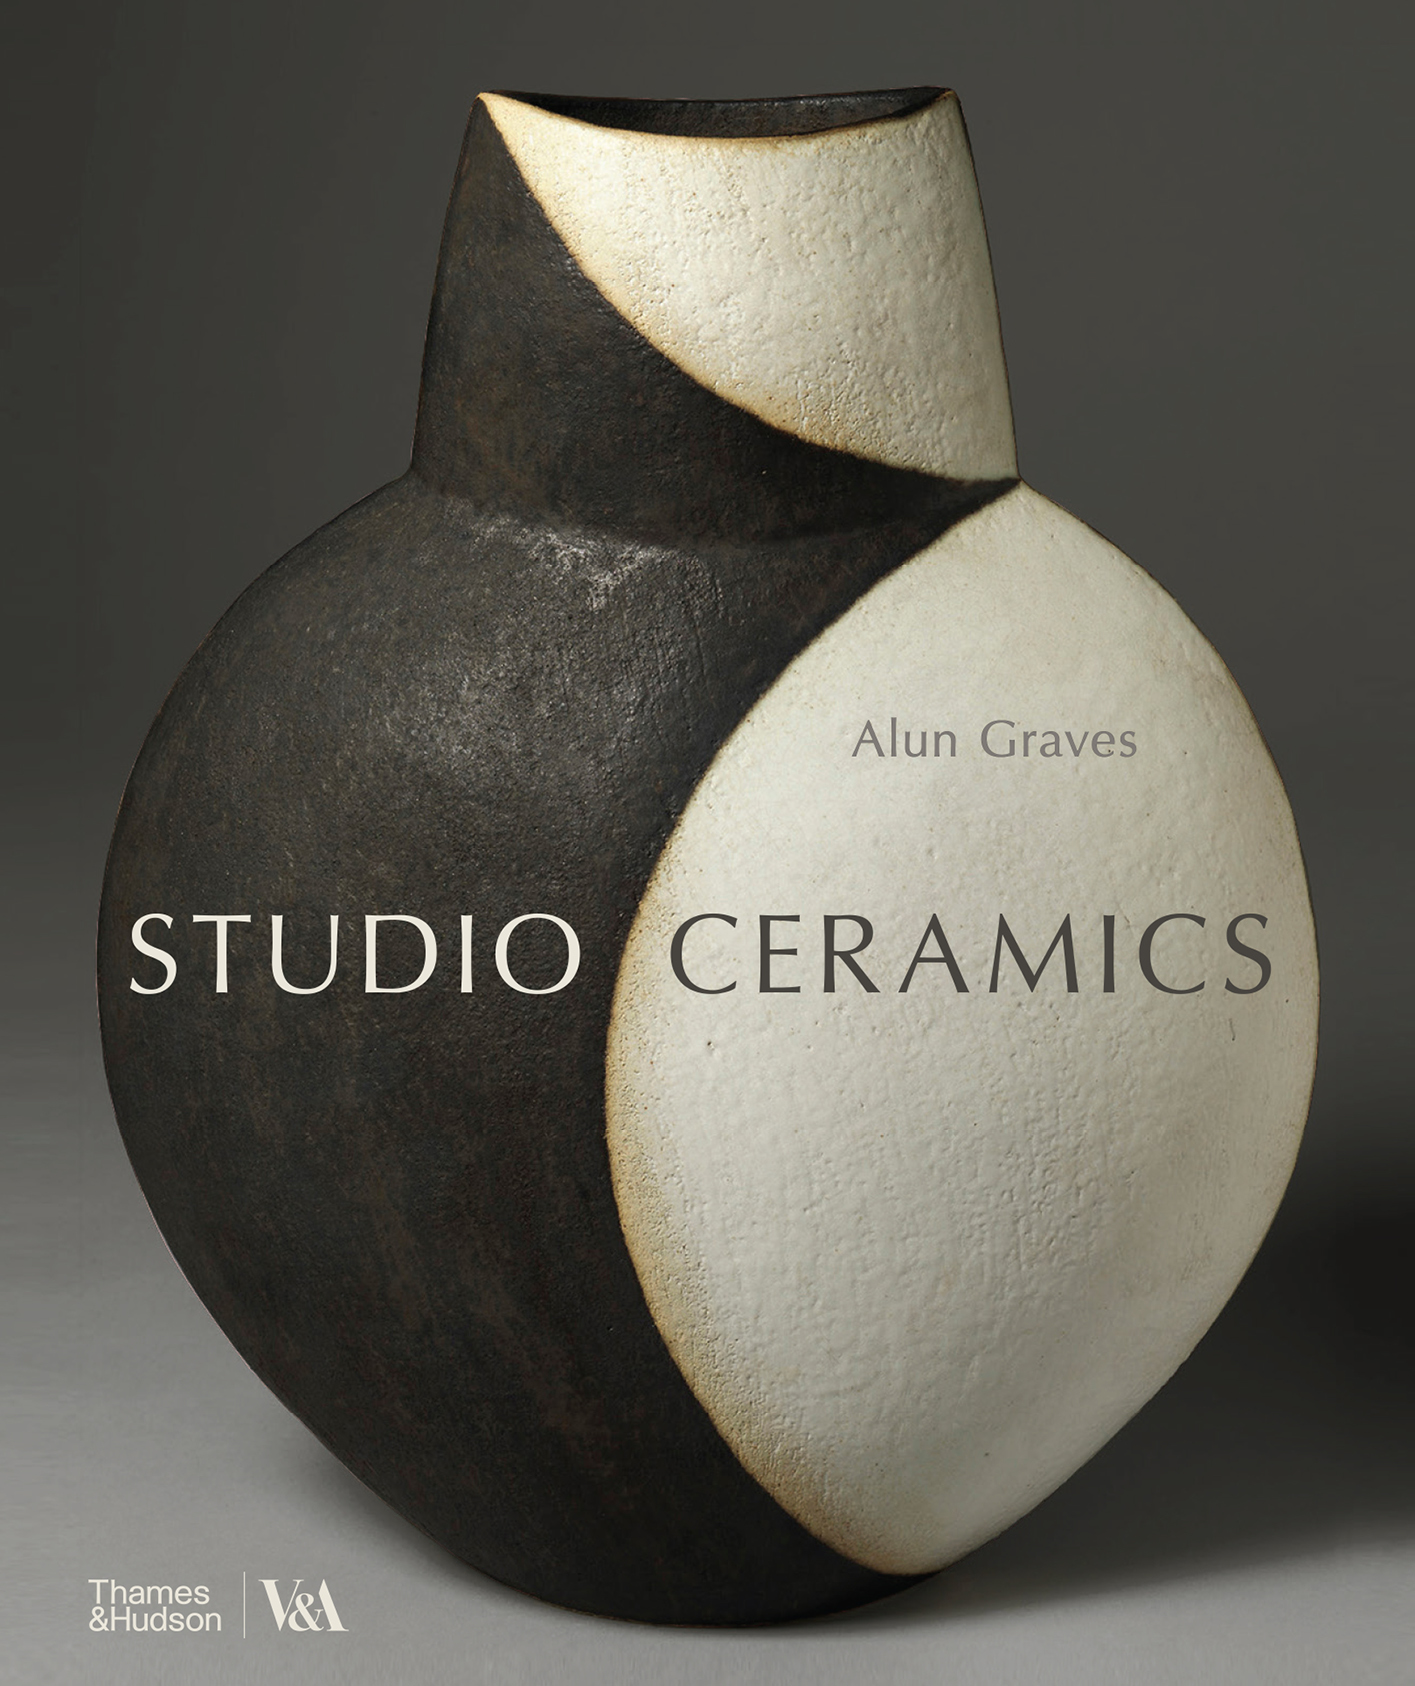 Studio Ceramics by Alun Graves